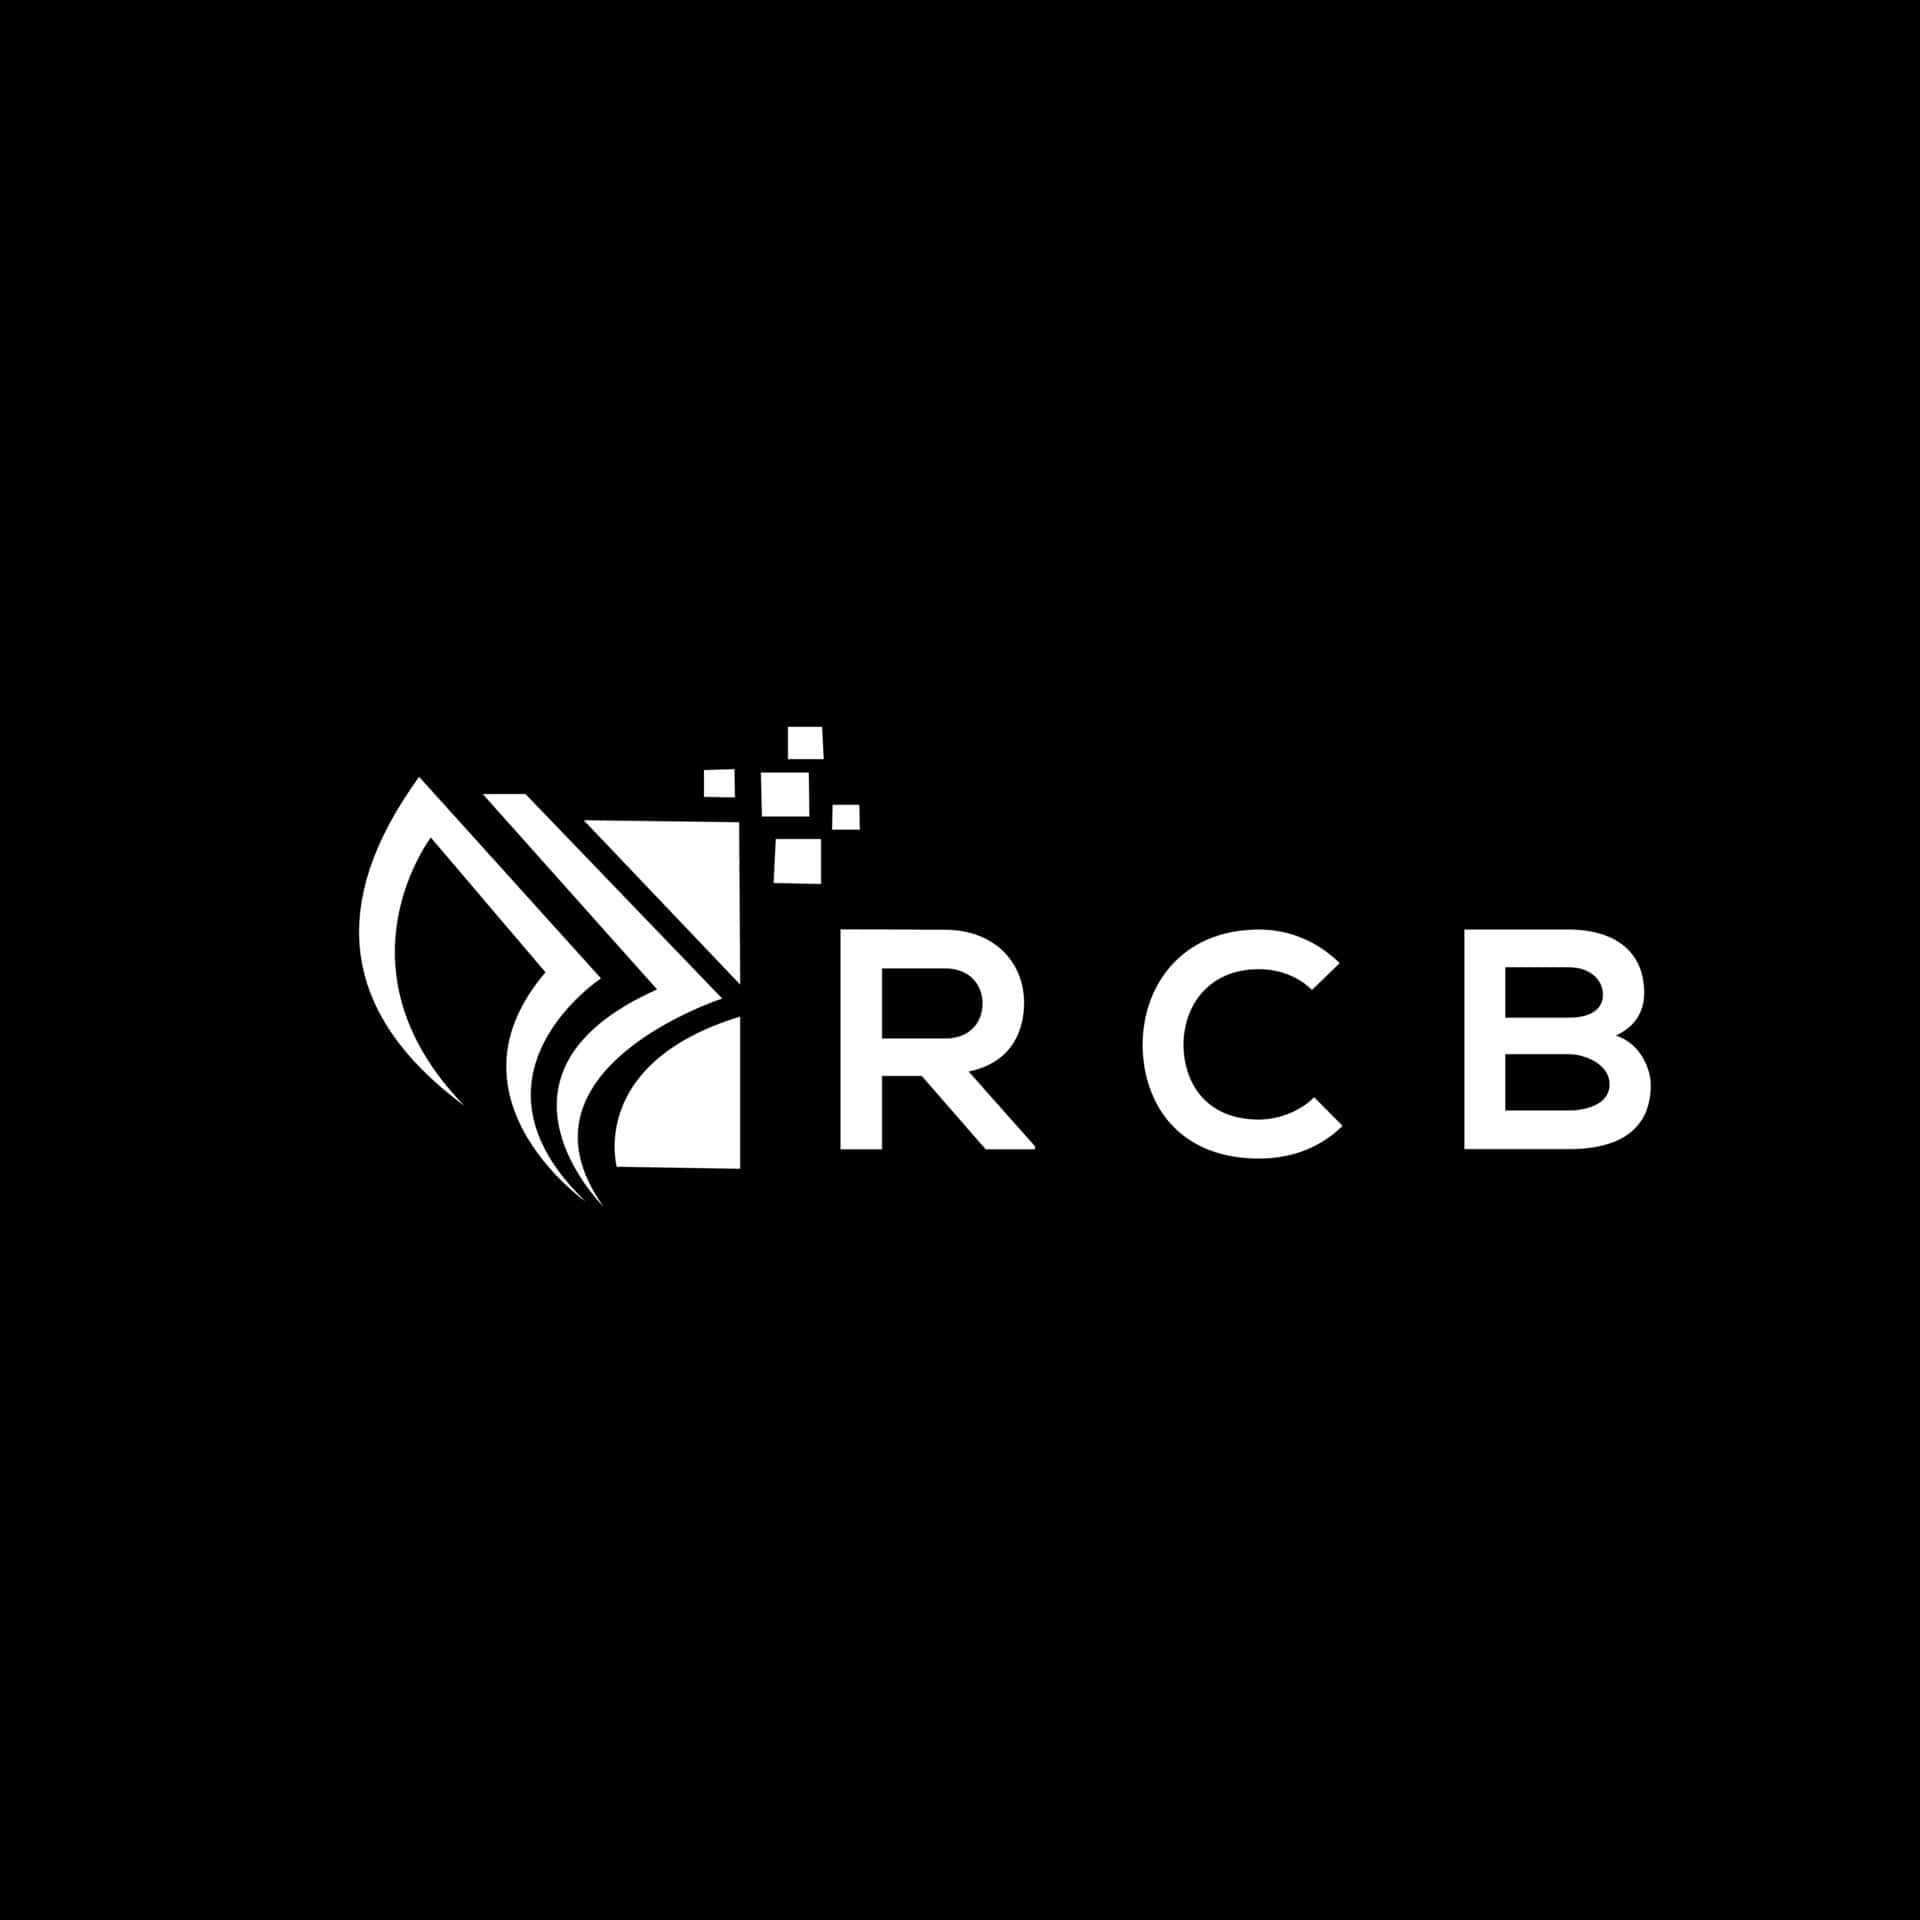 Royal Challengers Bangalore (RCB) Logo